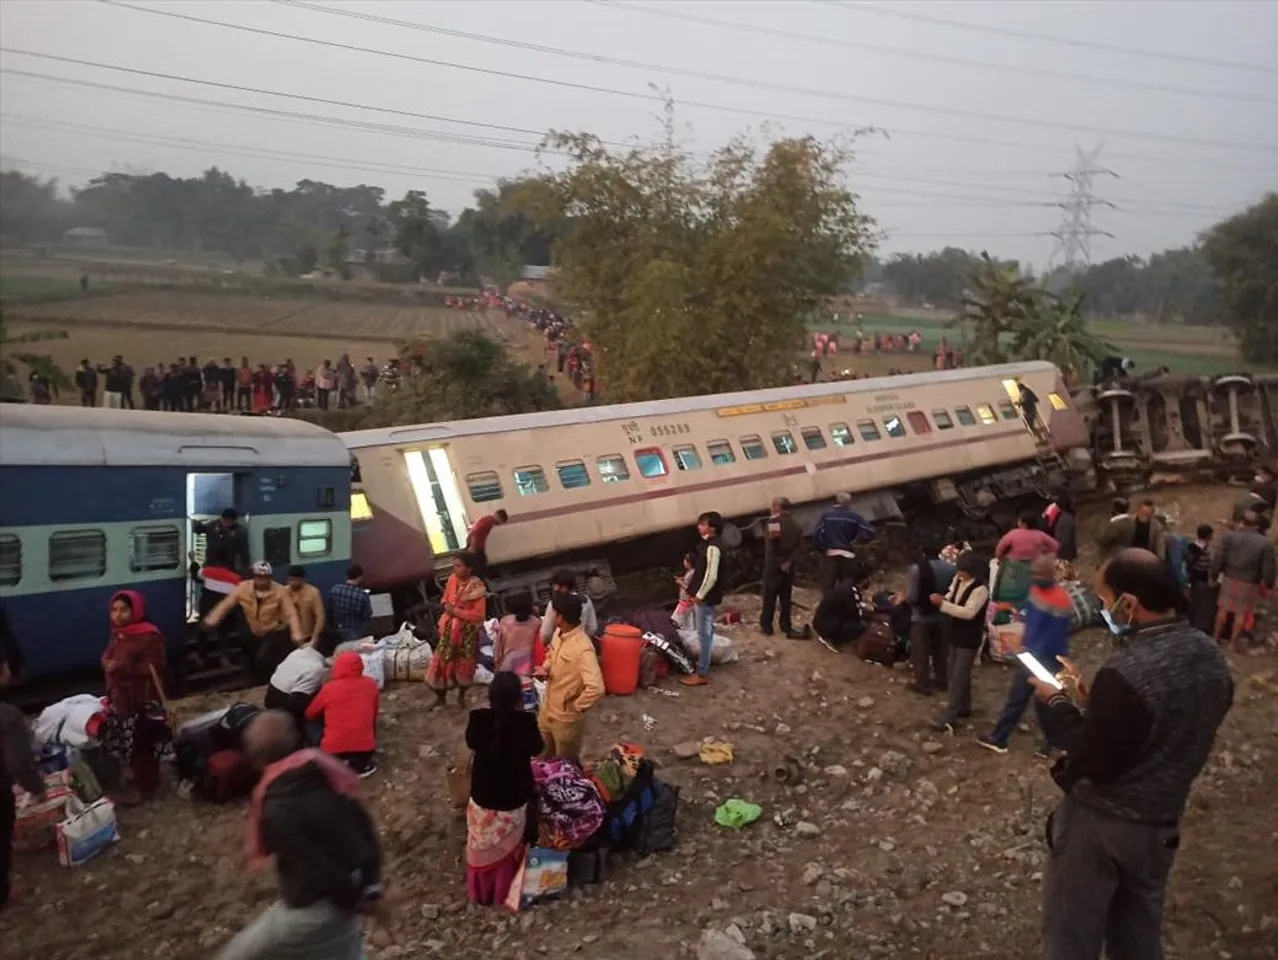 Railway minister Vaishnaw to reach train tragedy spot in Jalpaiguri